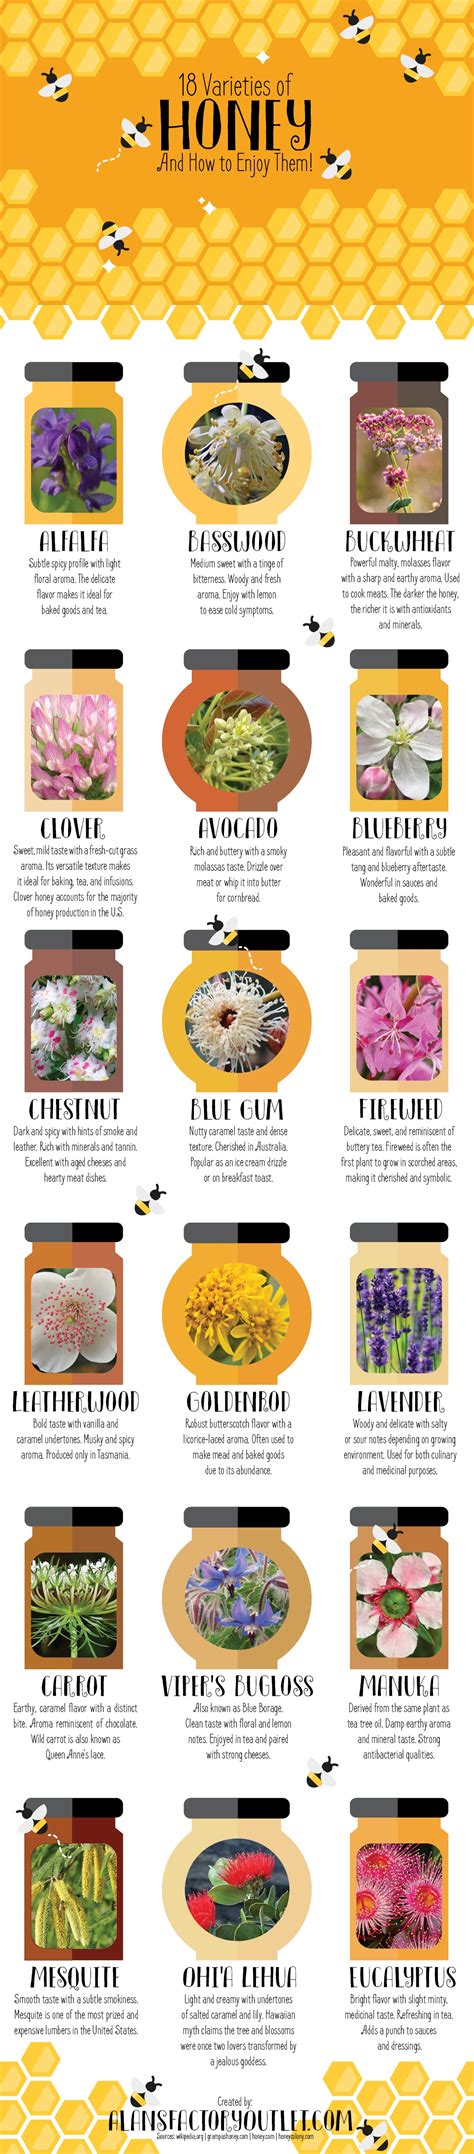 18 Honey Varieties From Around The World Infographic